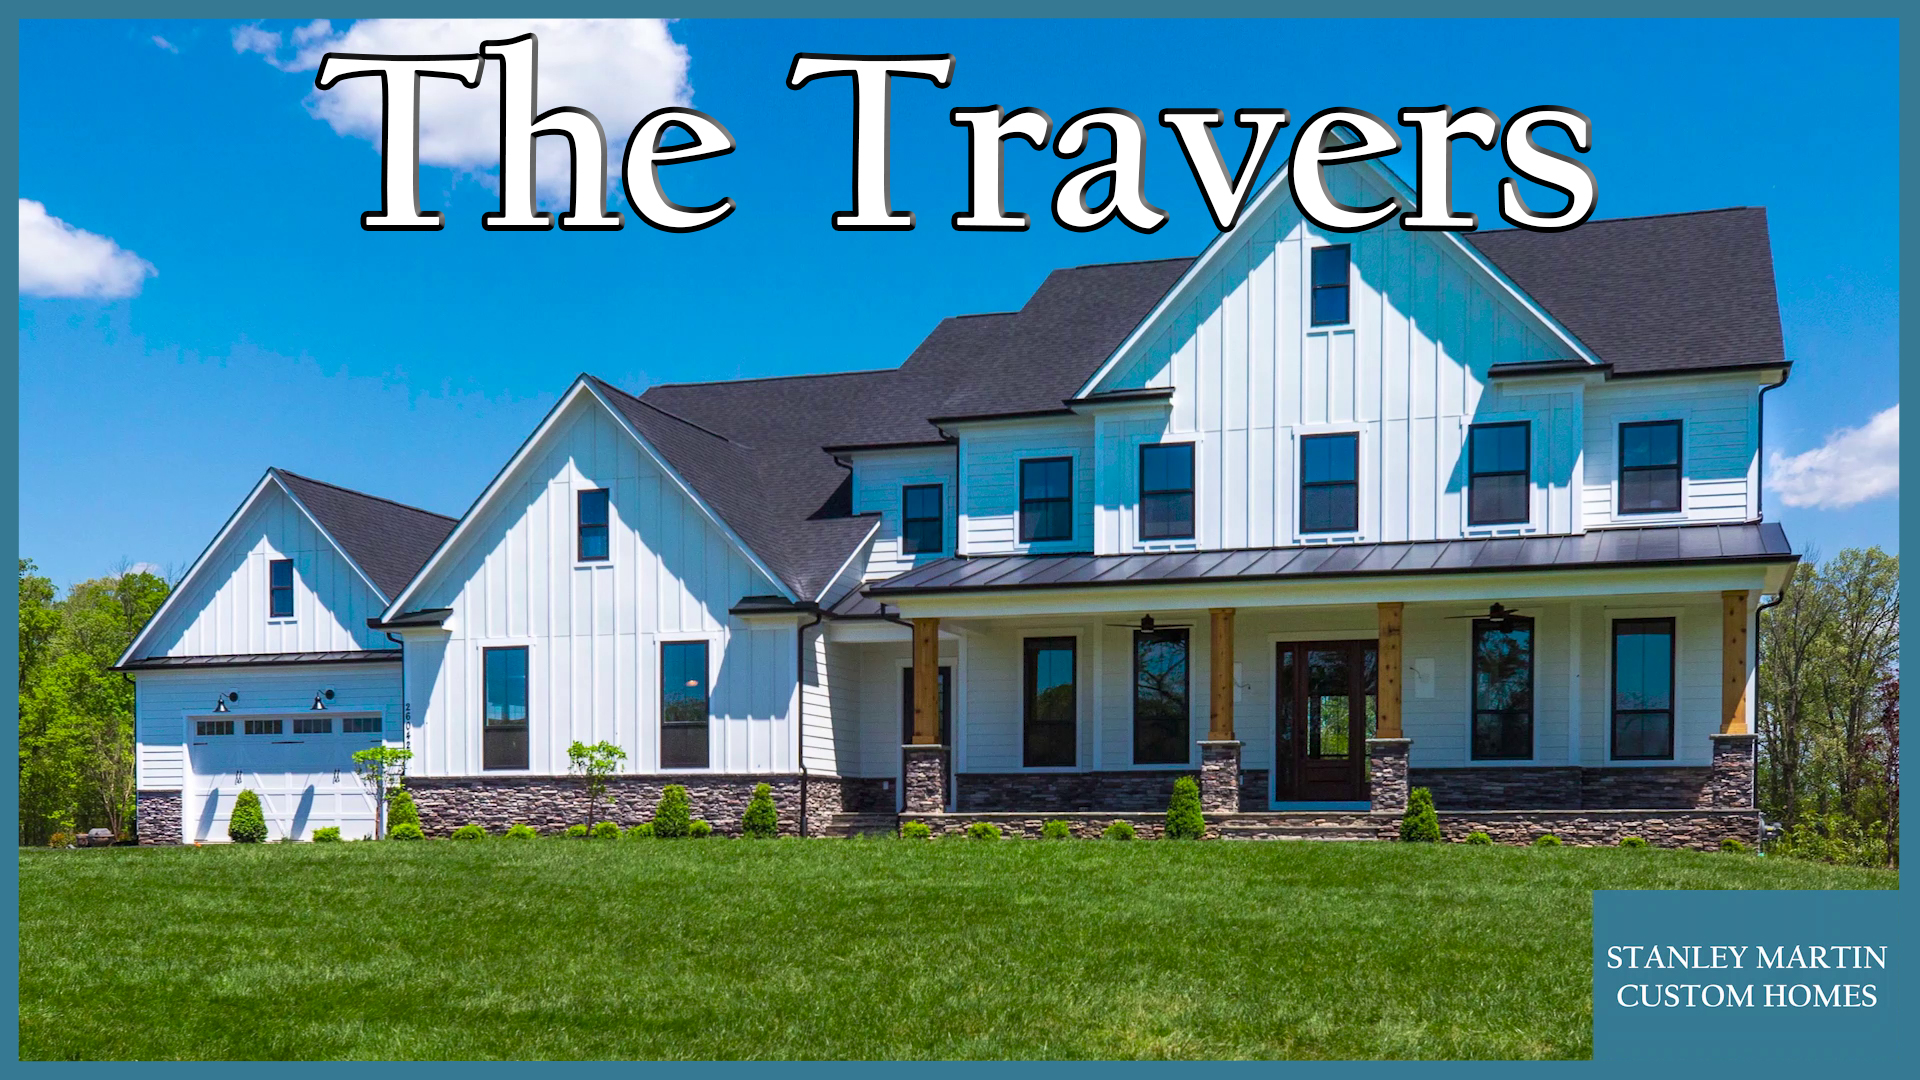 Stanley Martin Custom Homes | The Travers